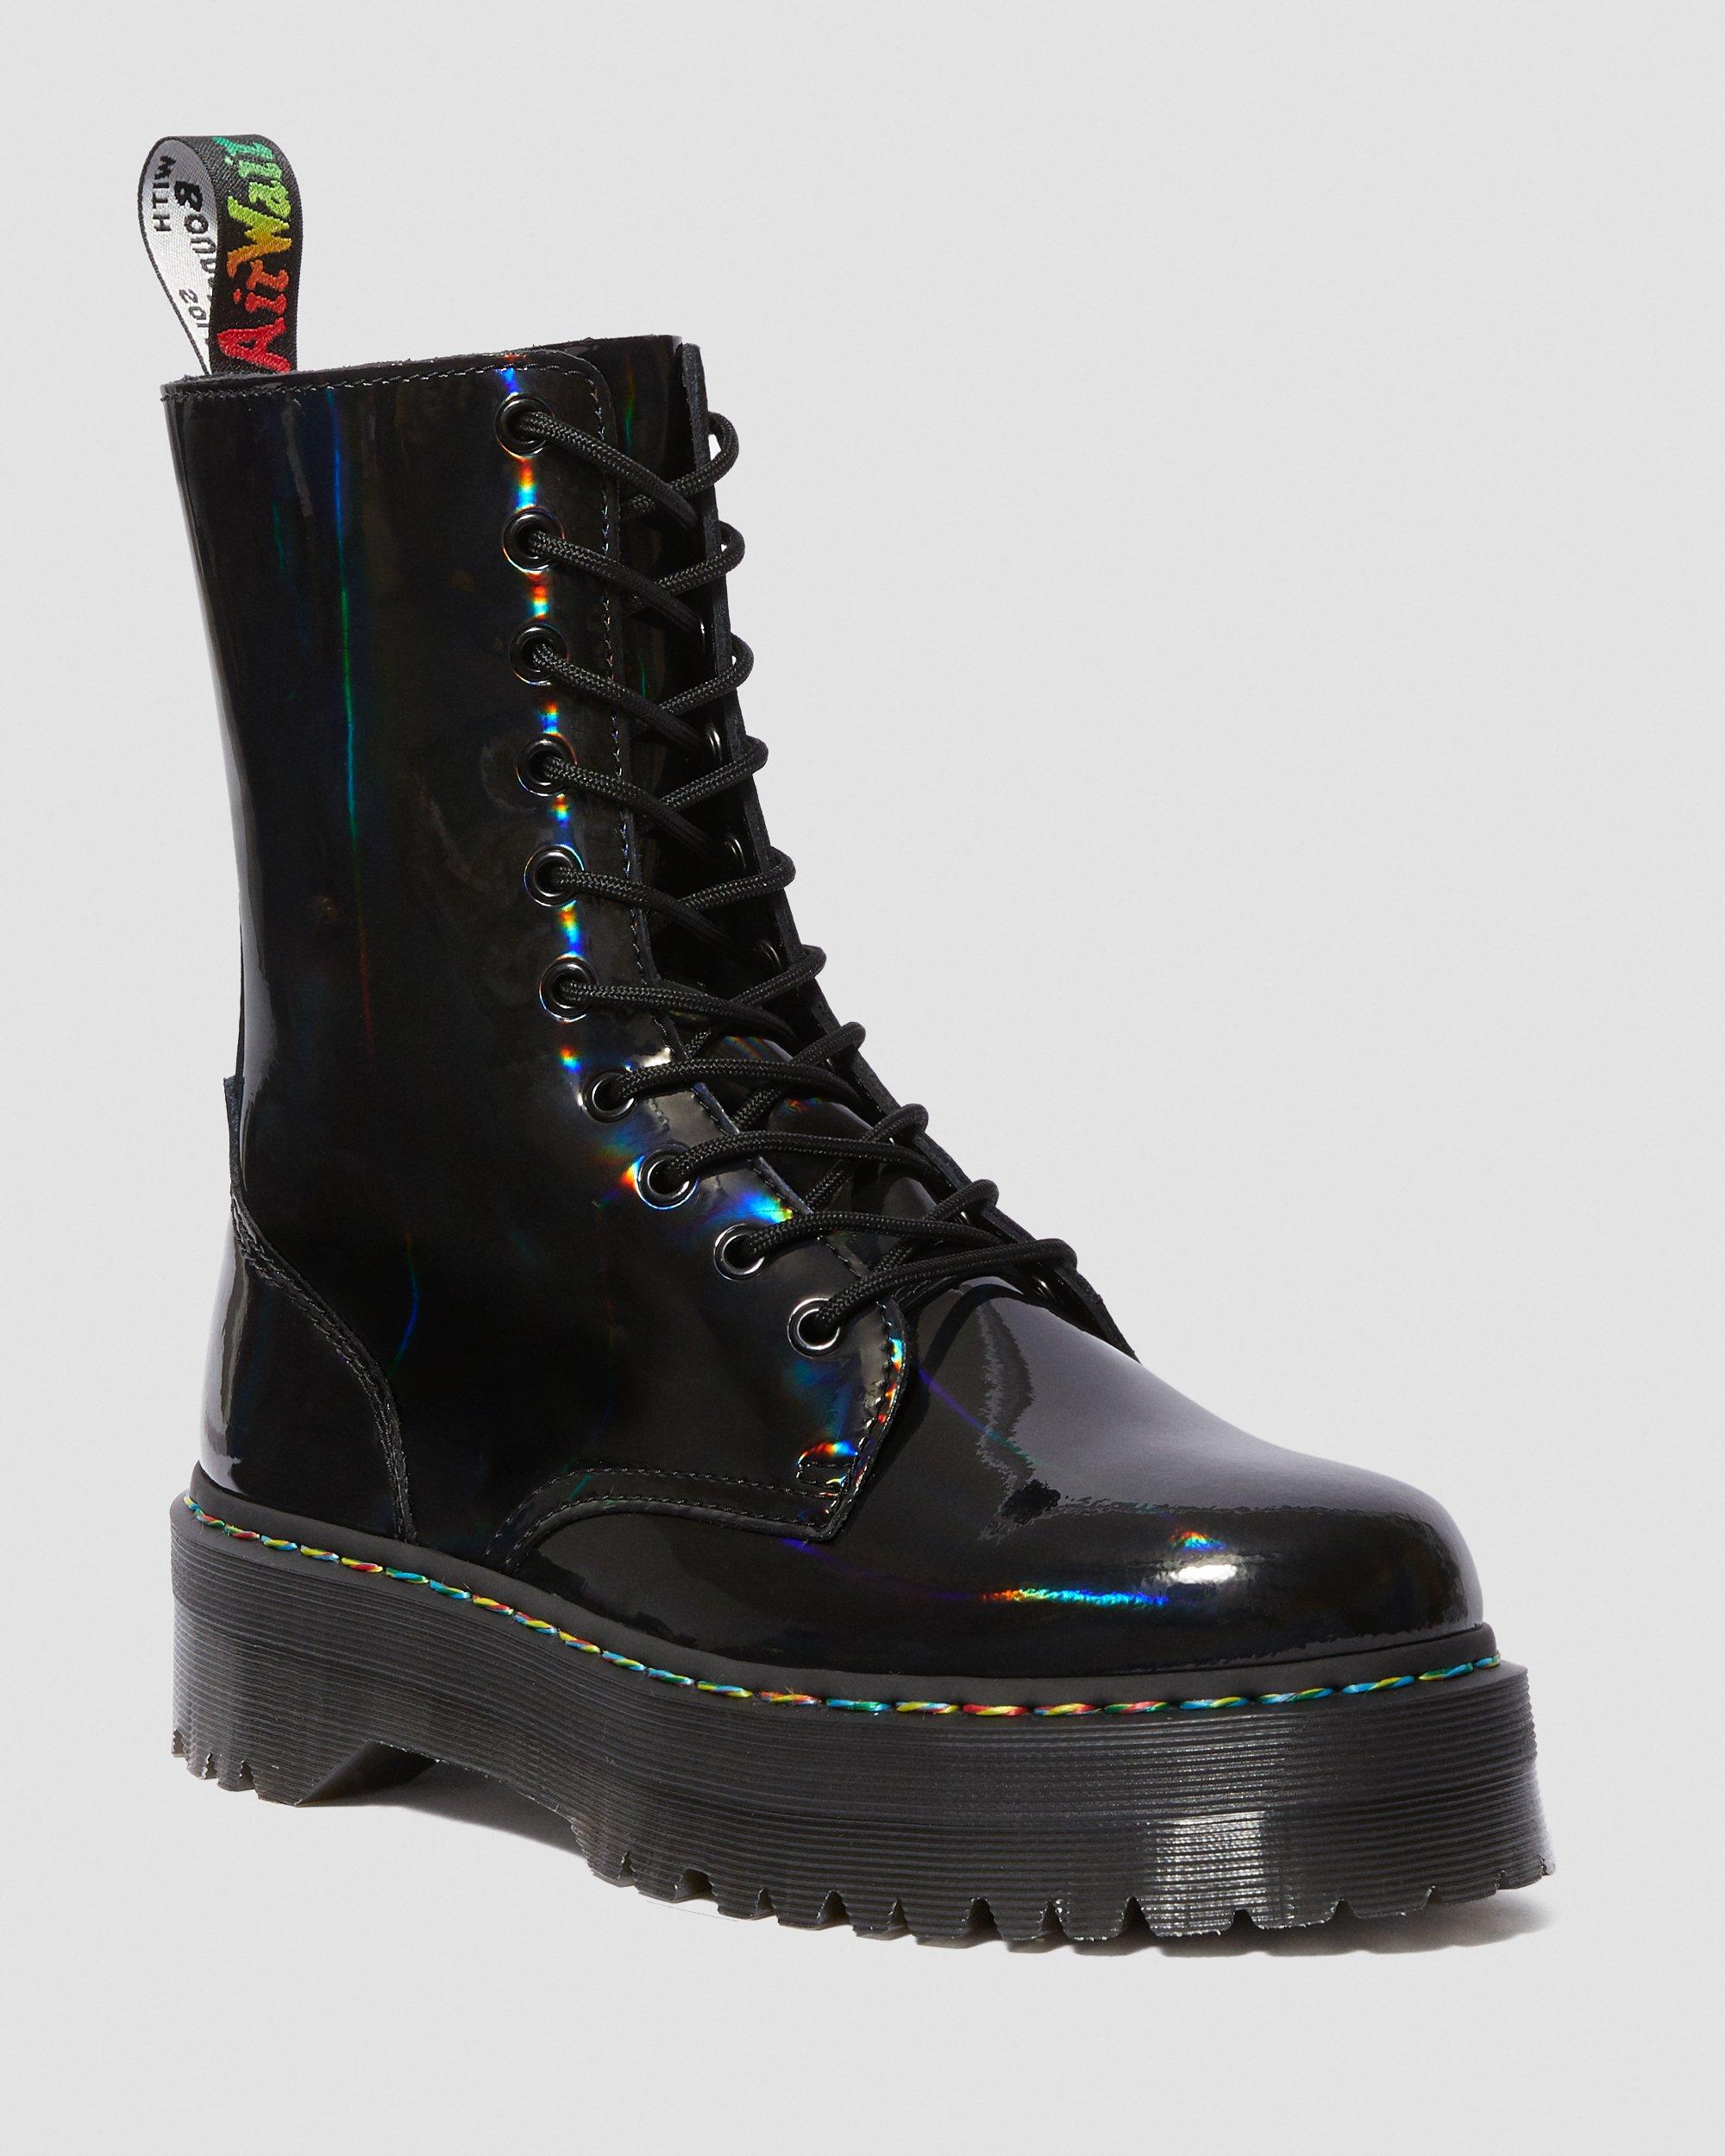 rainbow platform boots low price 29a12 